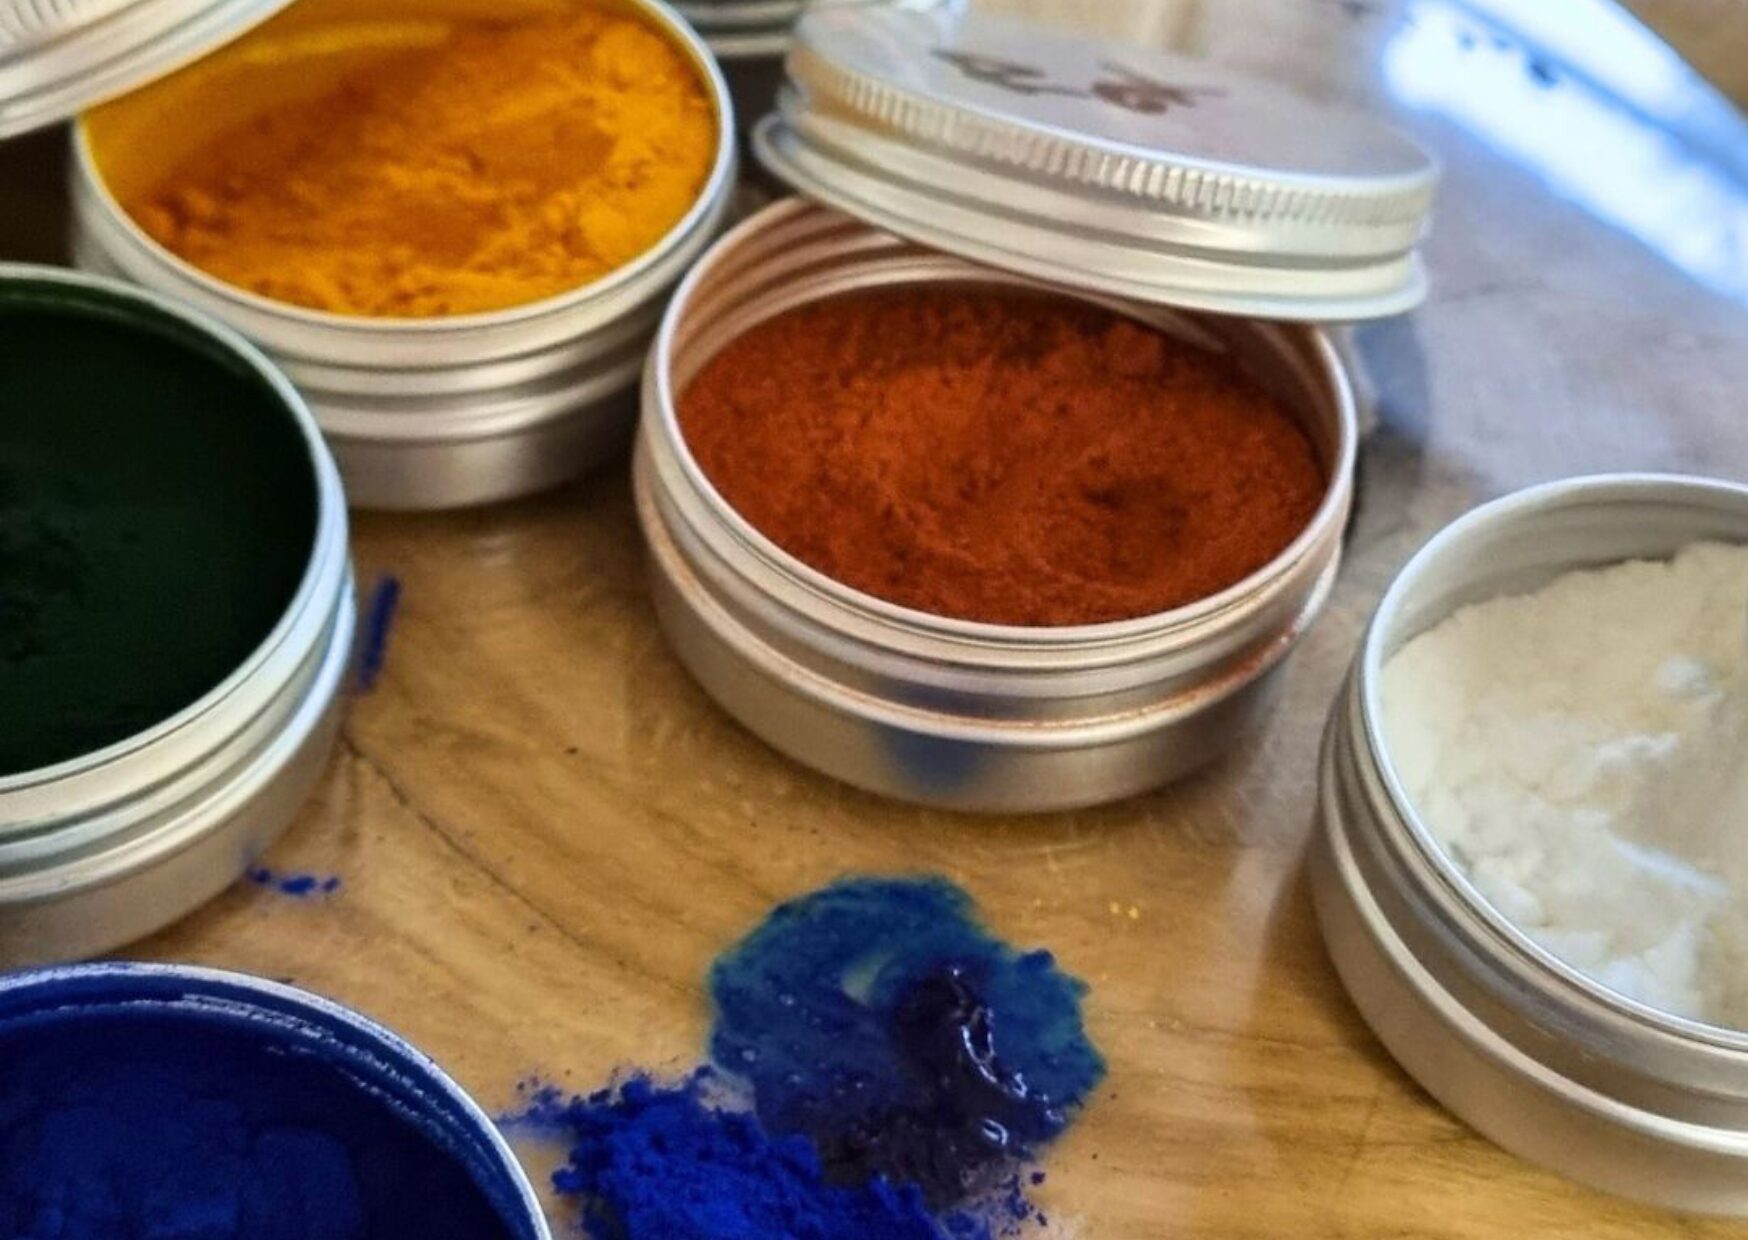 Placrylic Pigmente in Aluschalen - eine plastikfreie Acrylfarbe